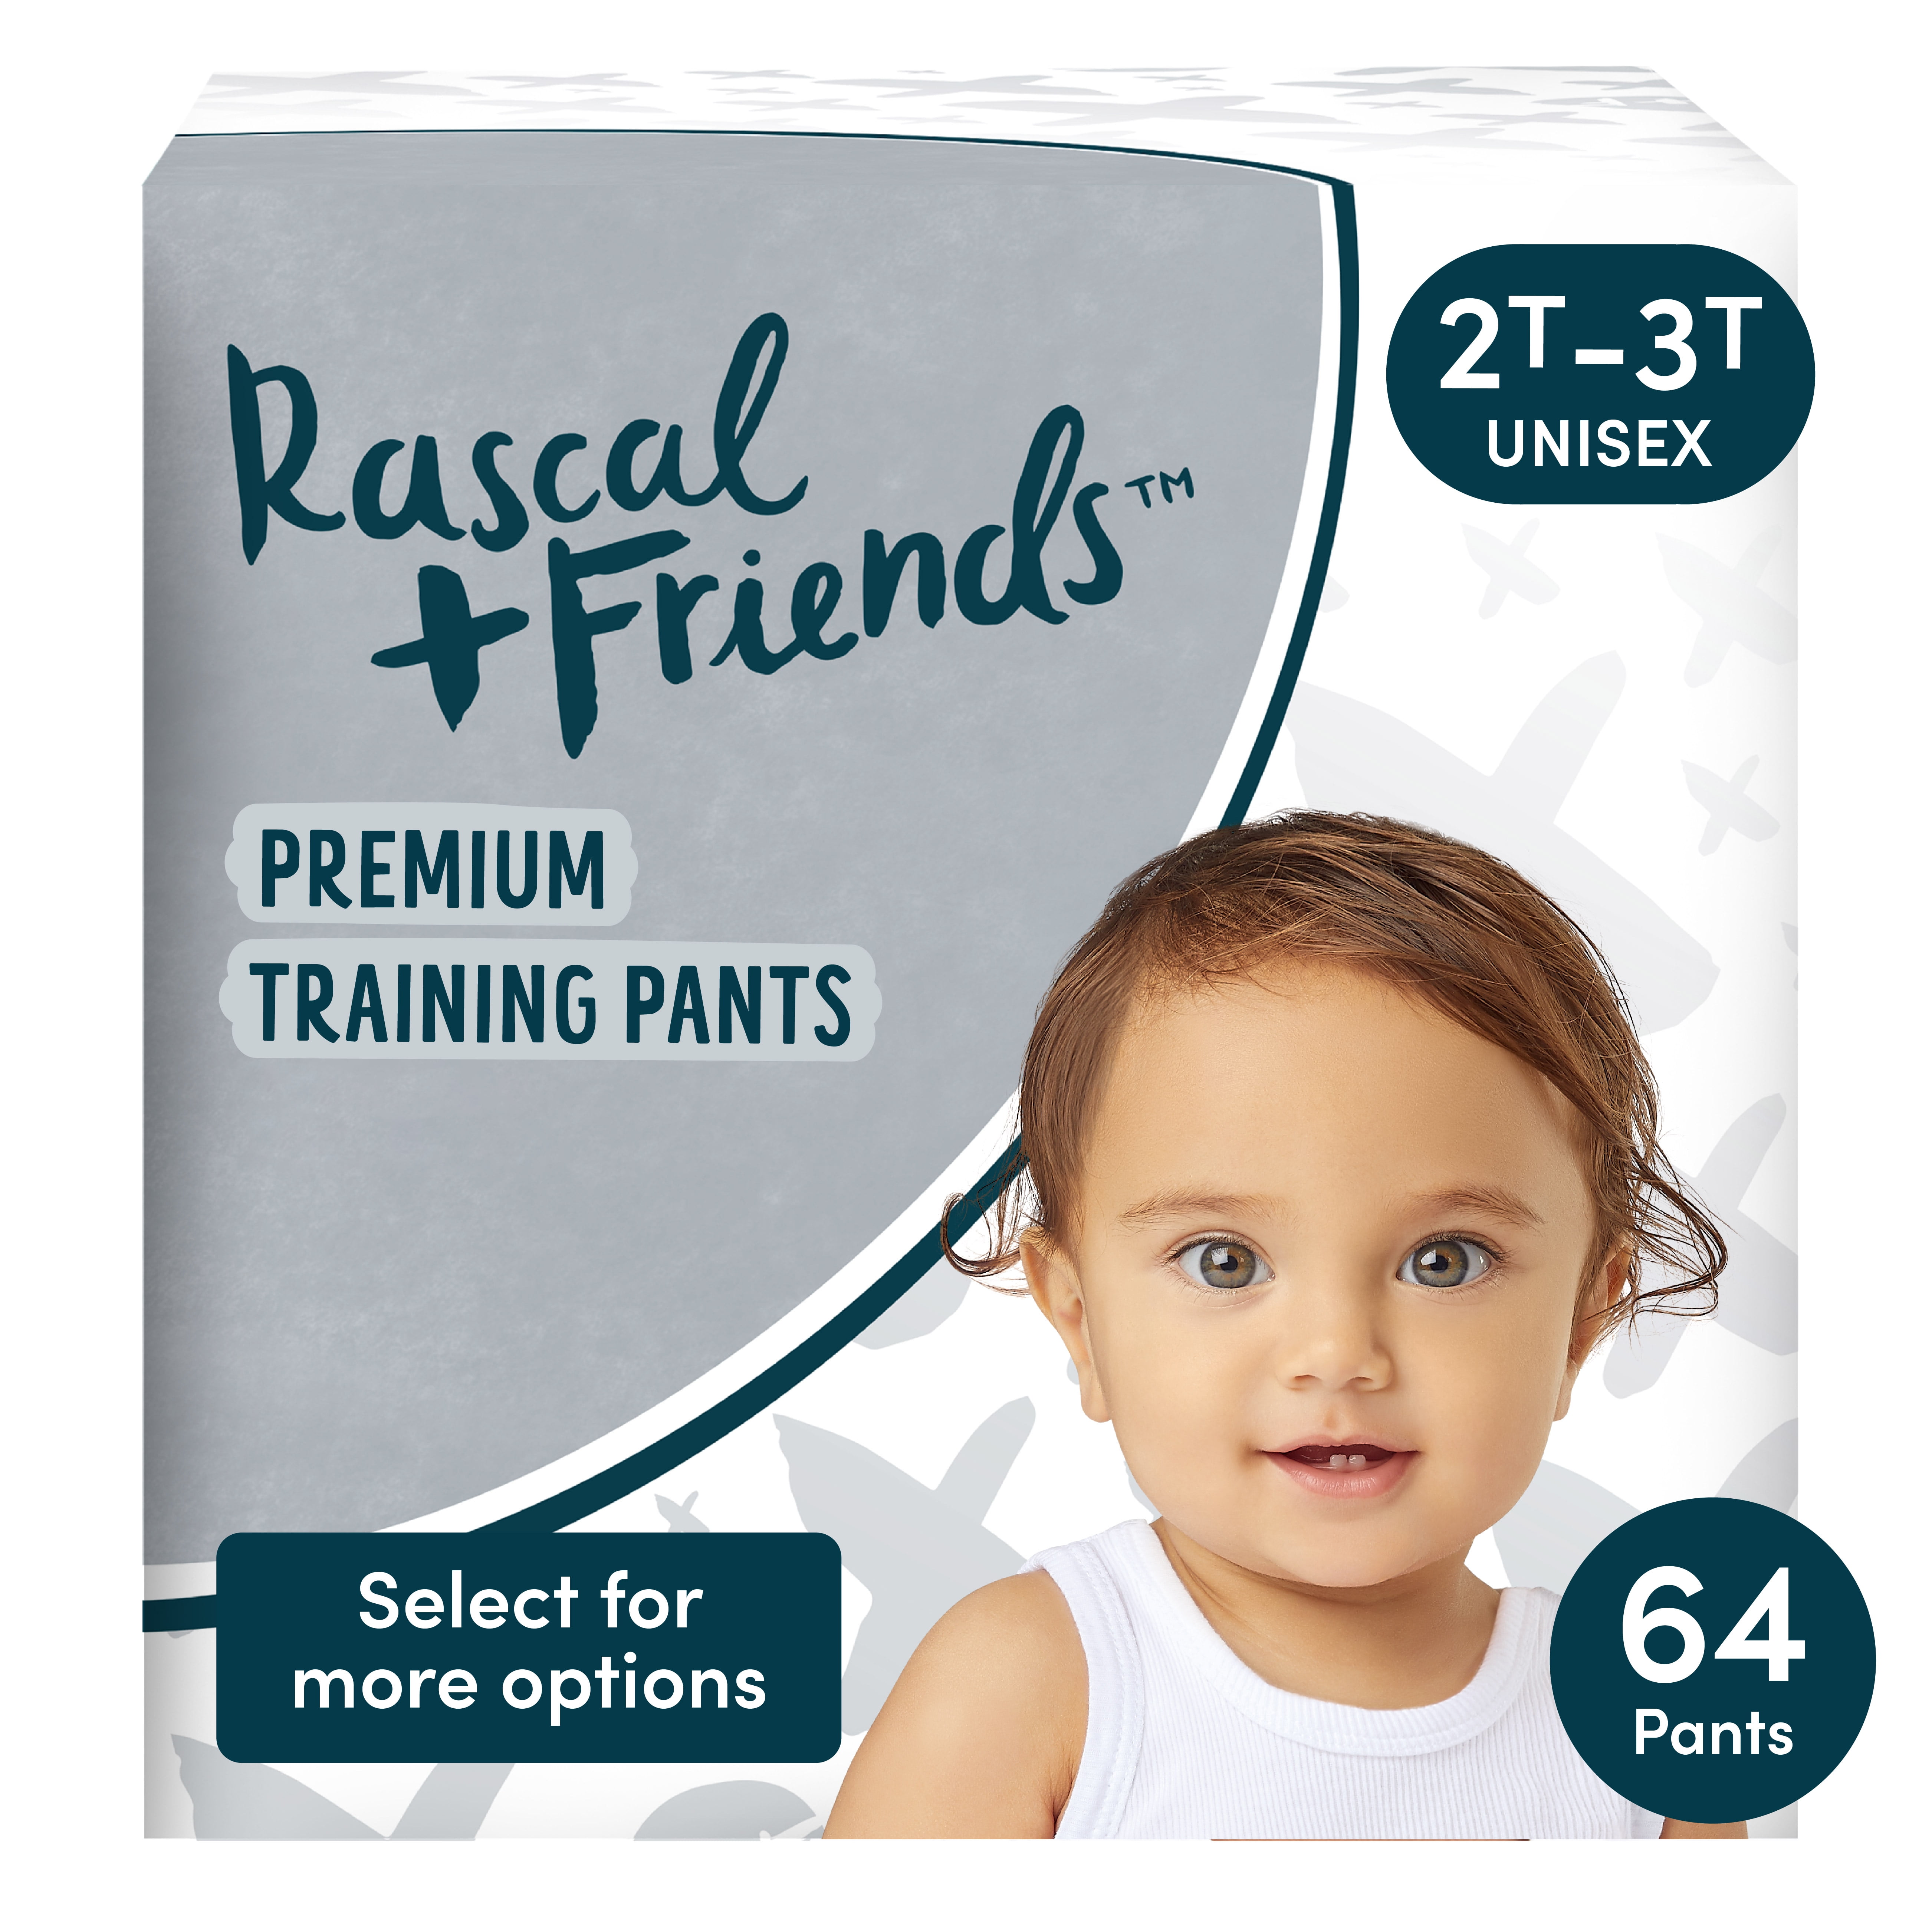 Rascal + Friends Premium Training Pants 2T-3T, 64 Count (Select